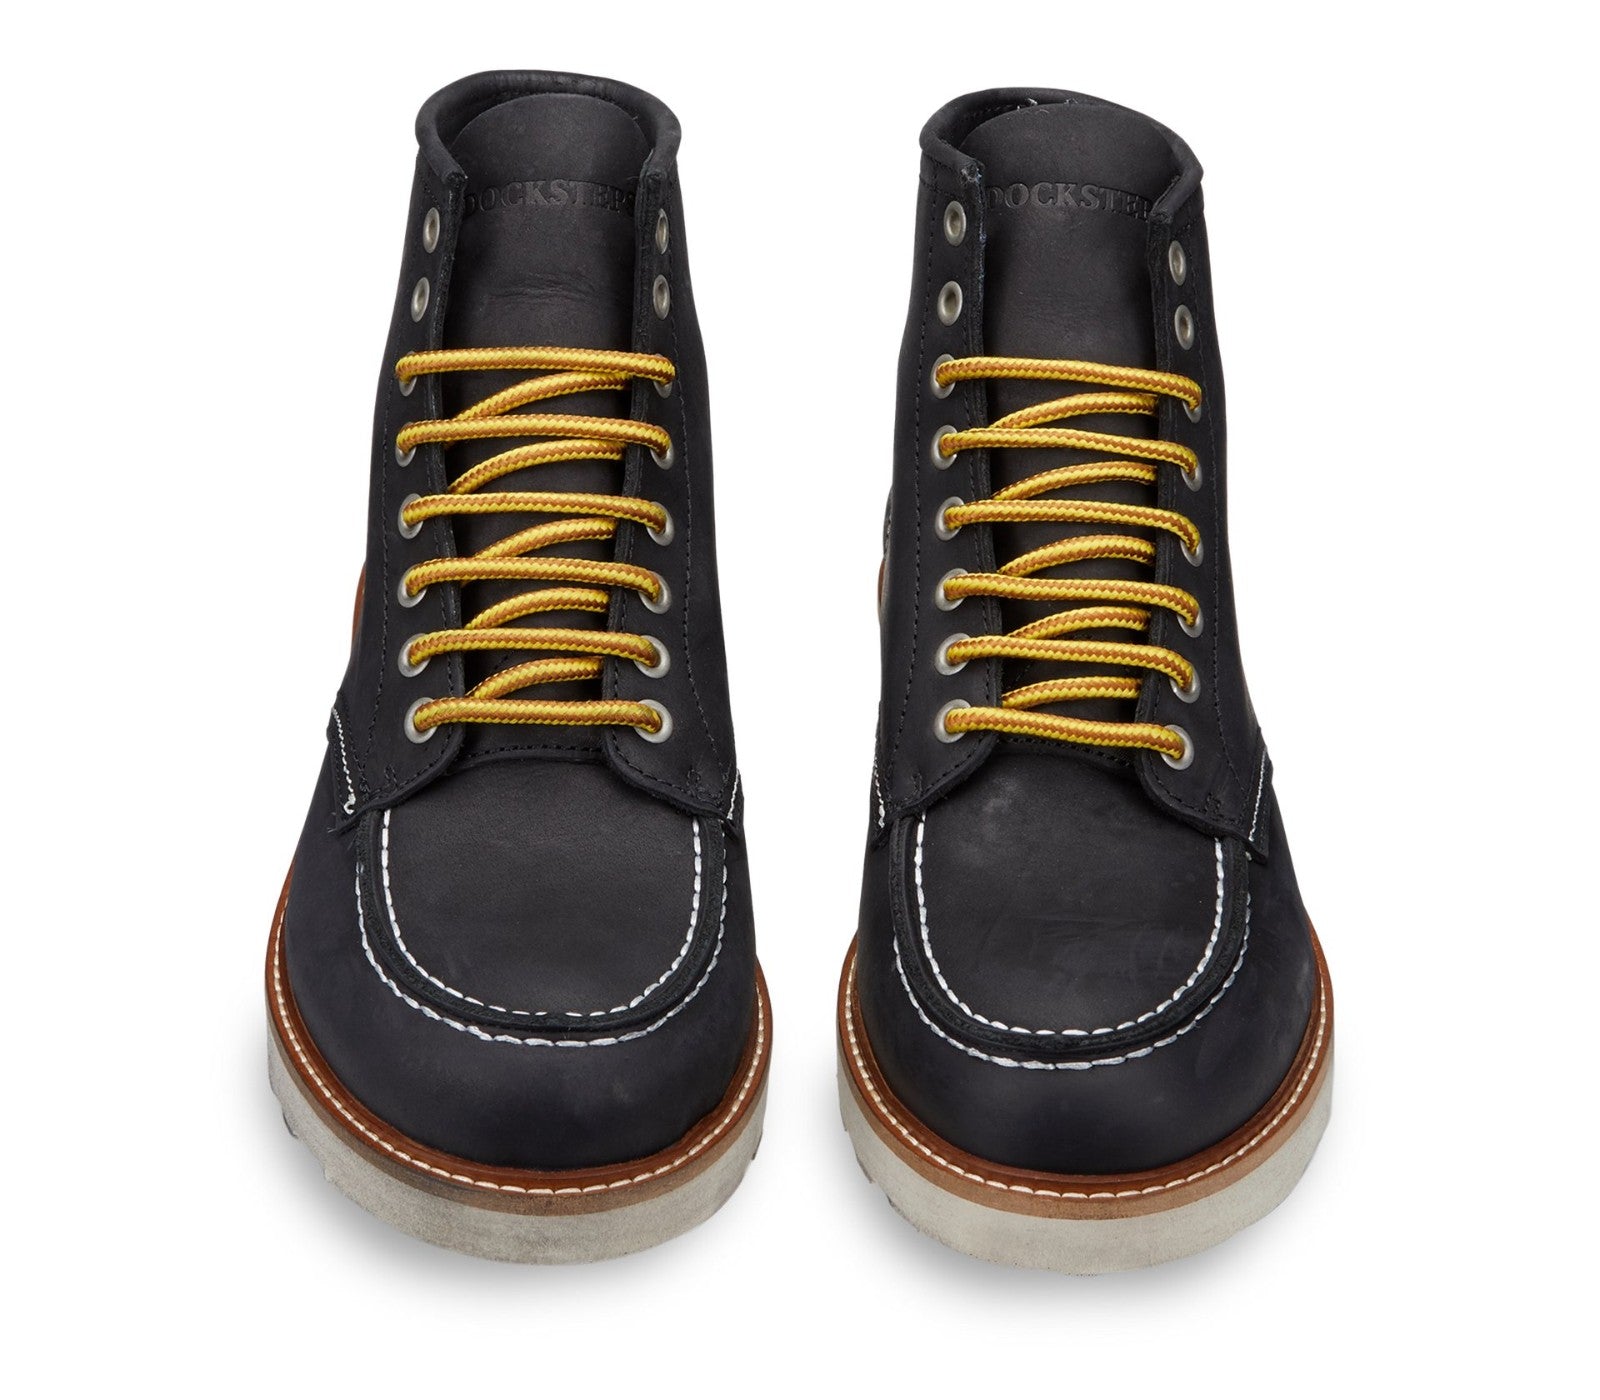 Men's leather boot Black